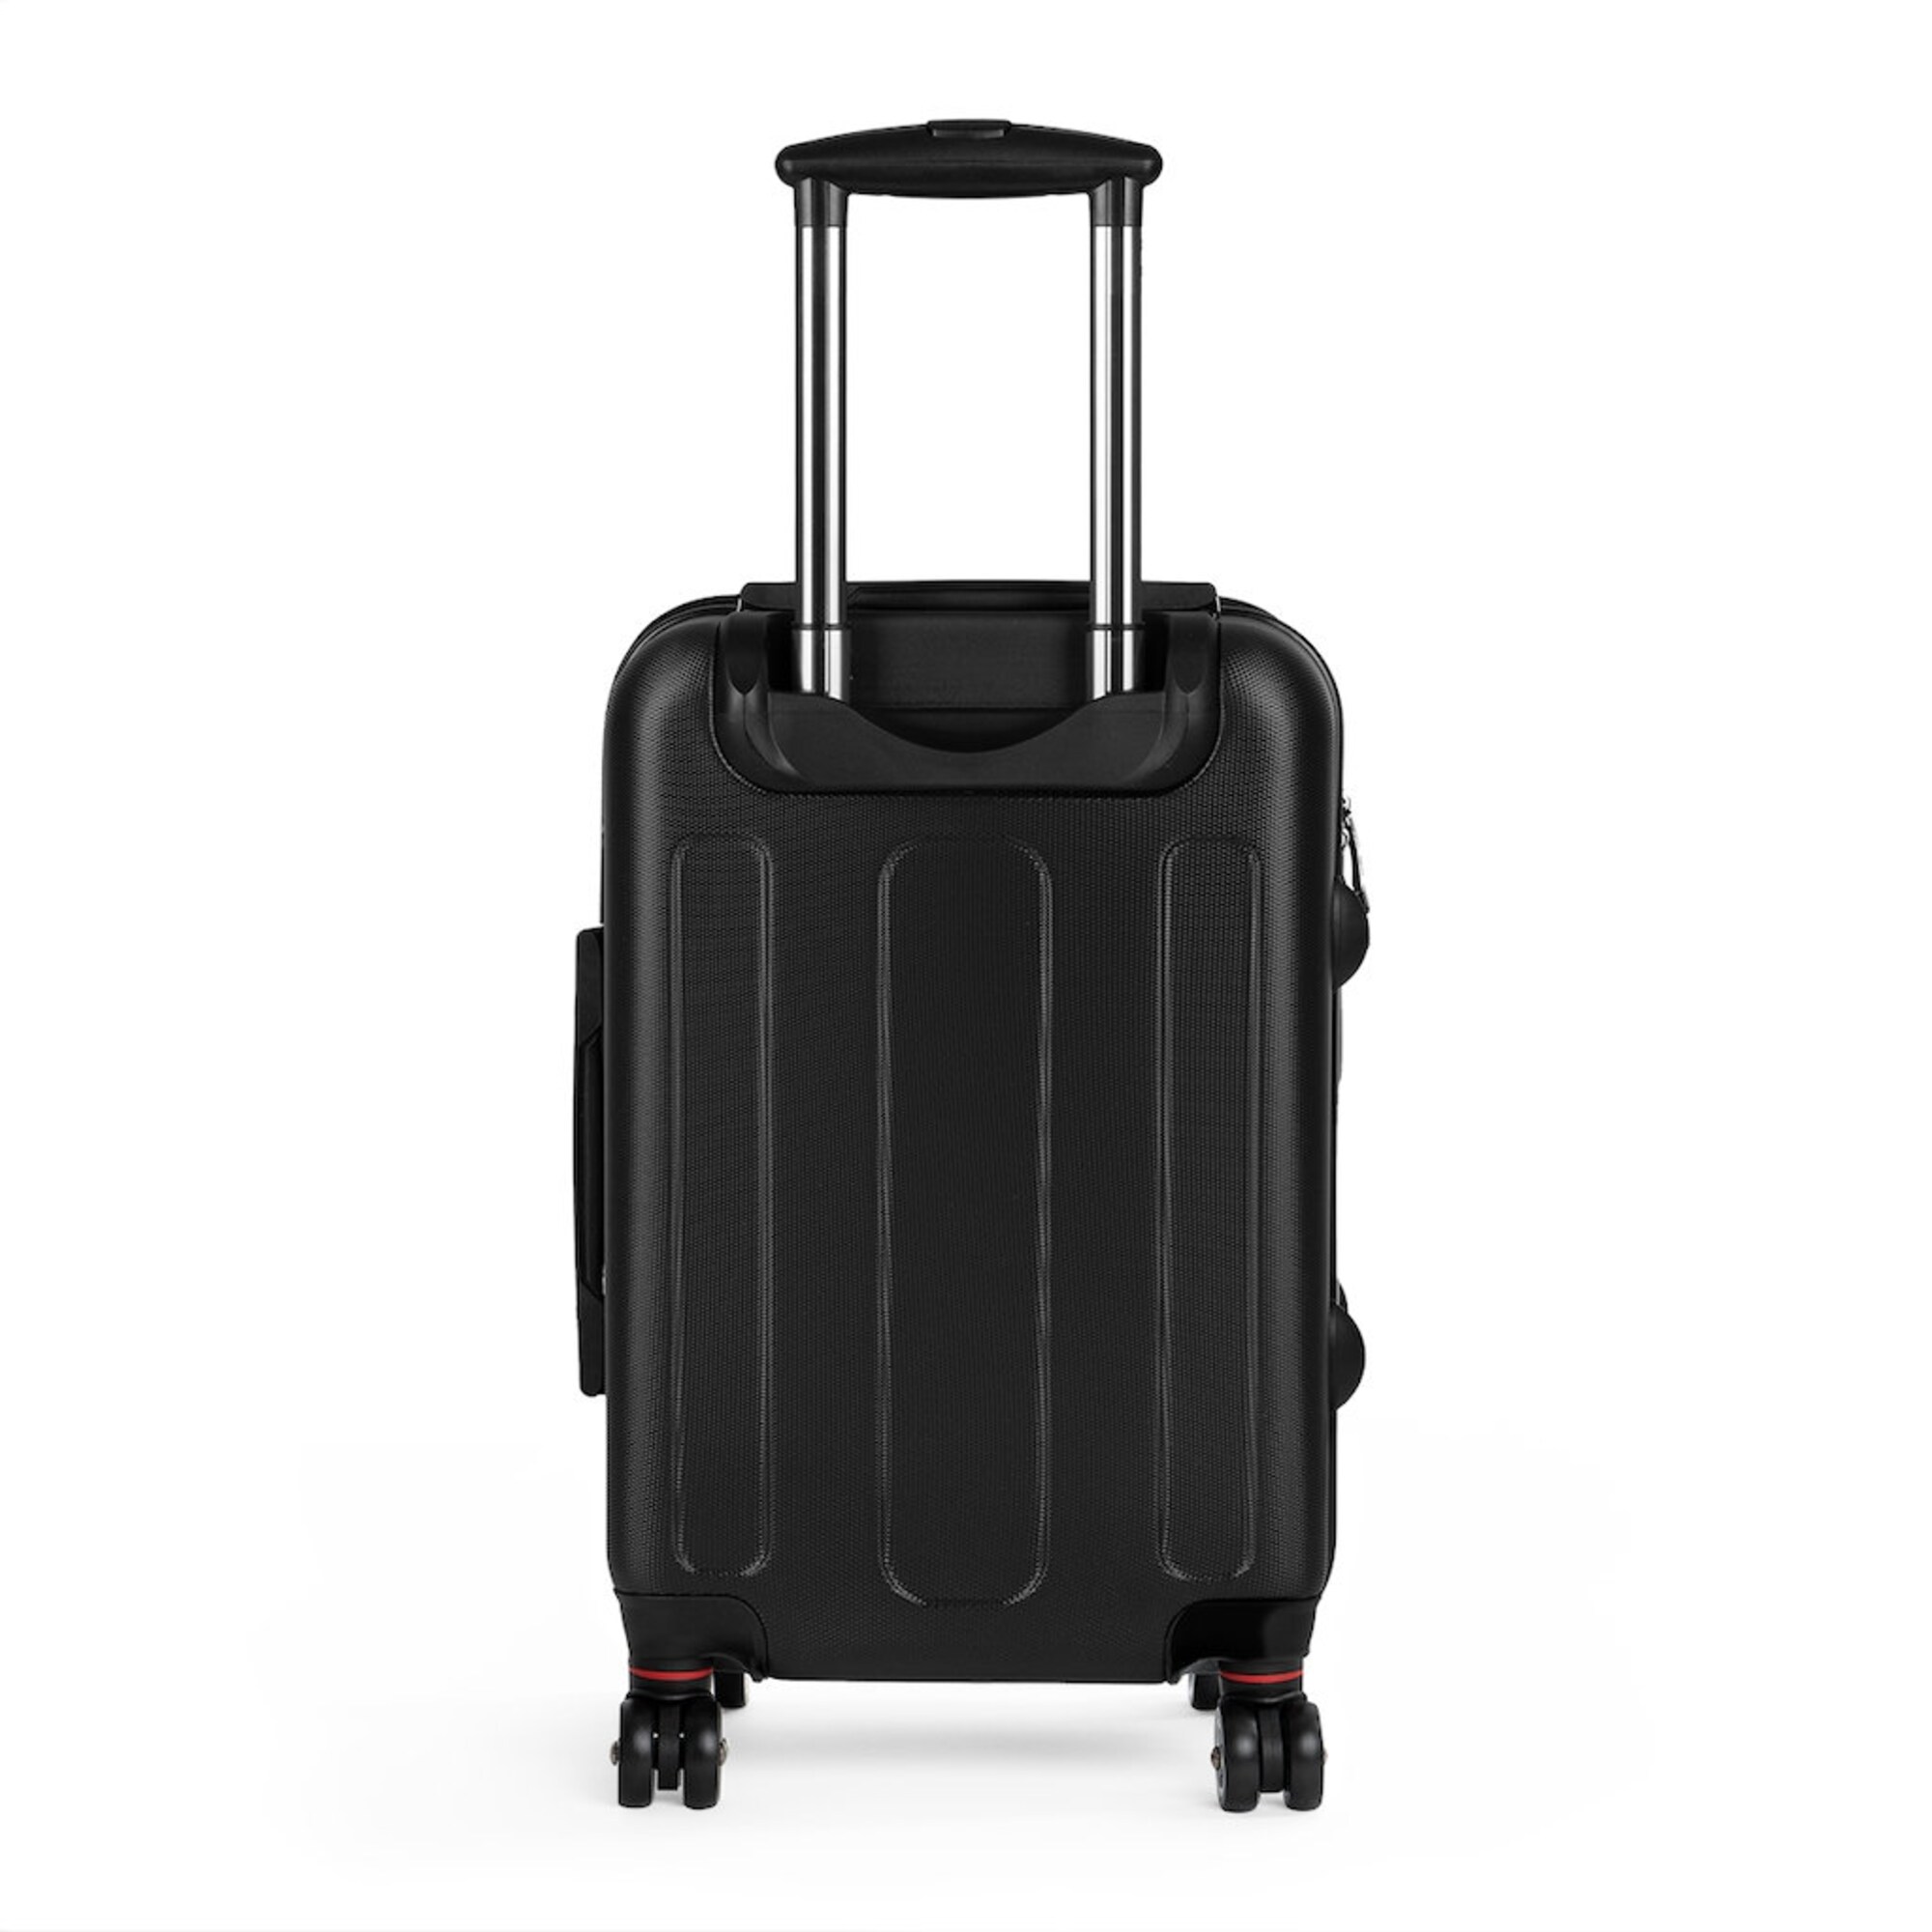 Discover Horse Carryon Luggage Cabin Suitcase, Hardcase Luggage